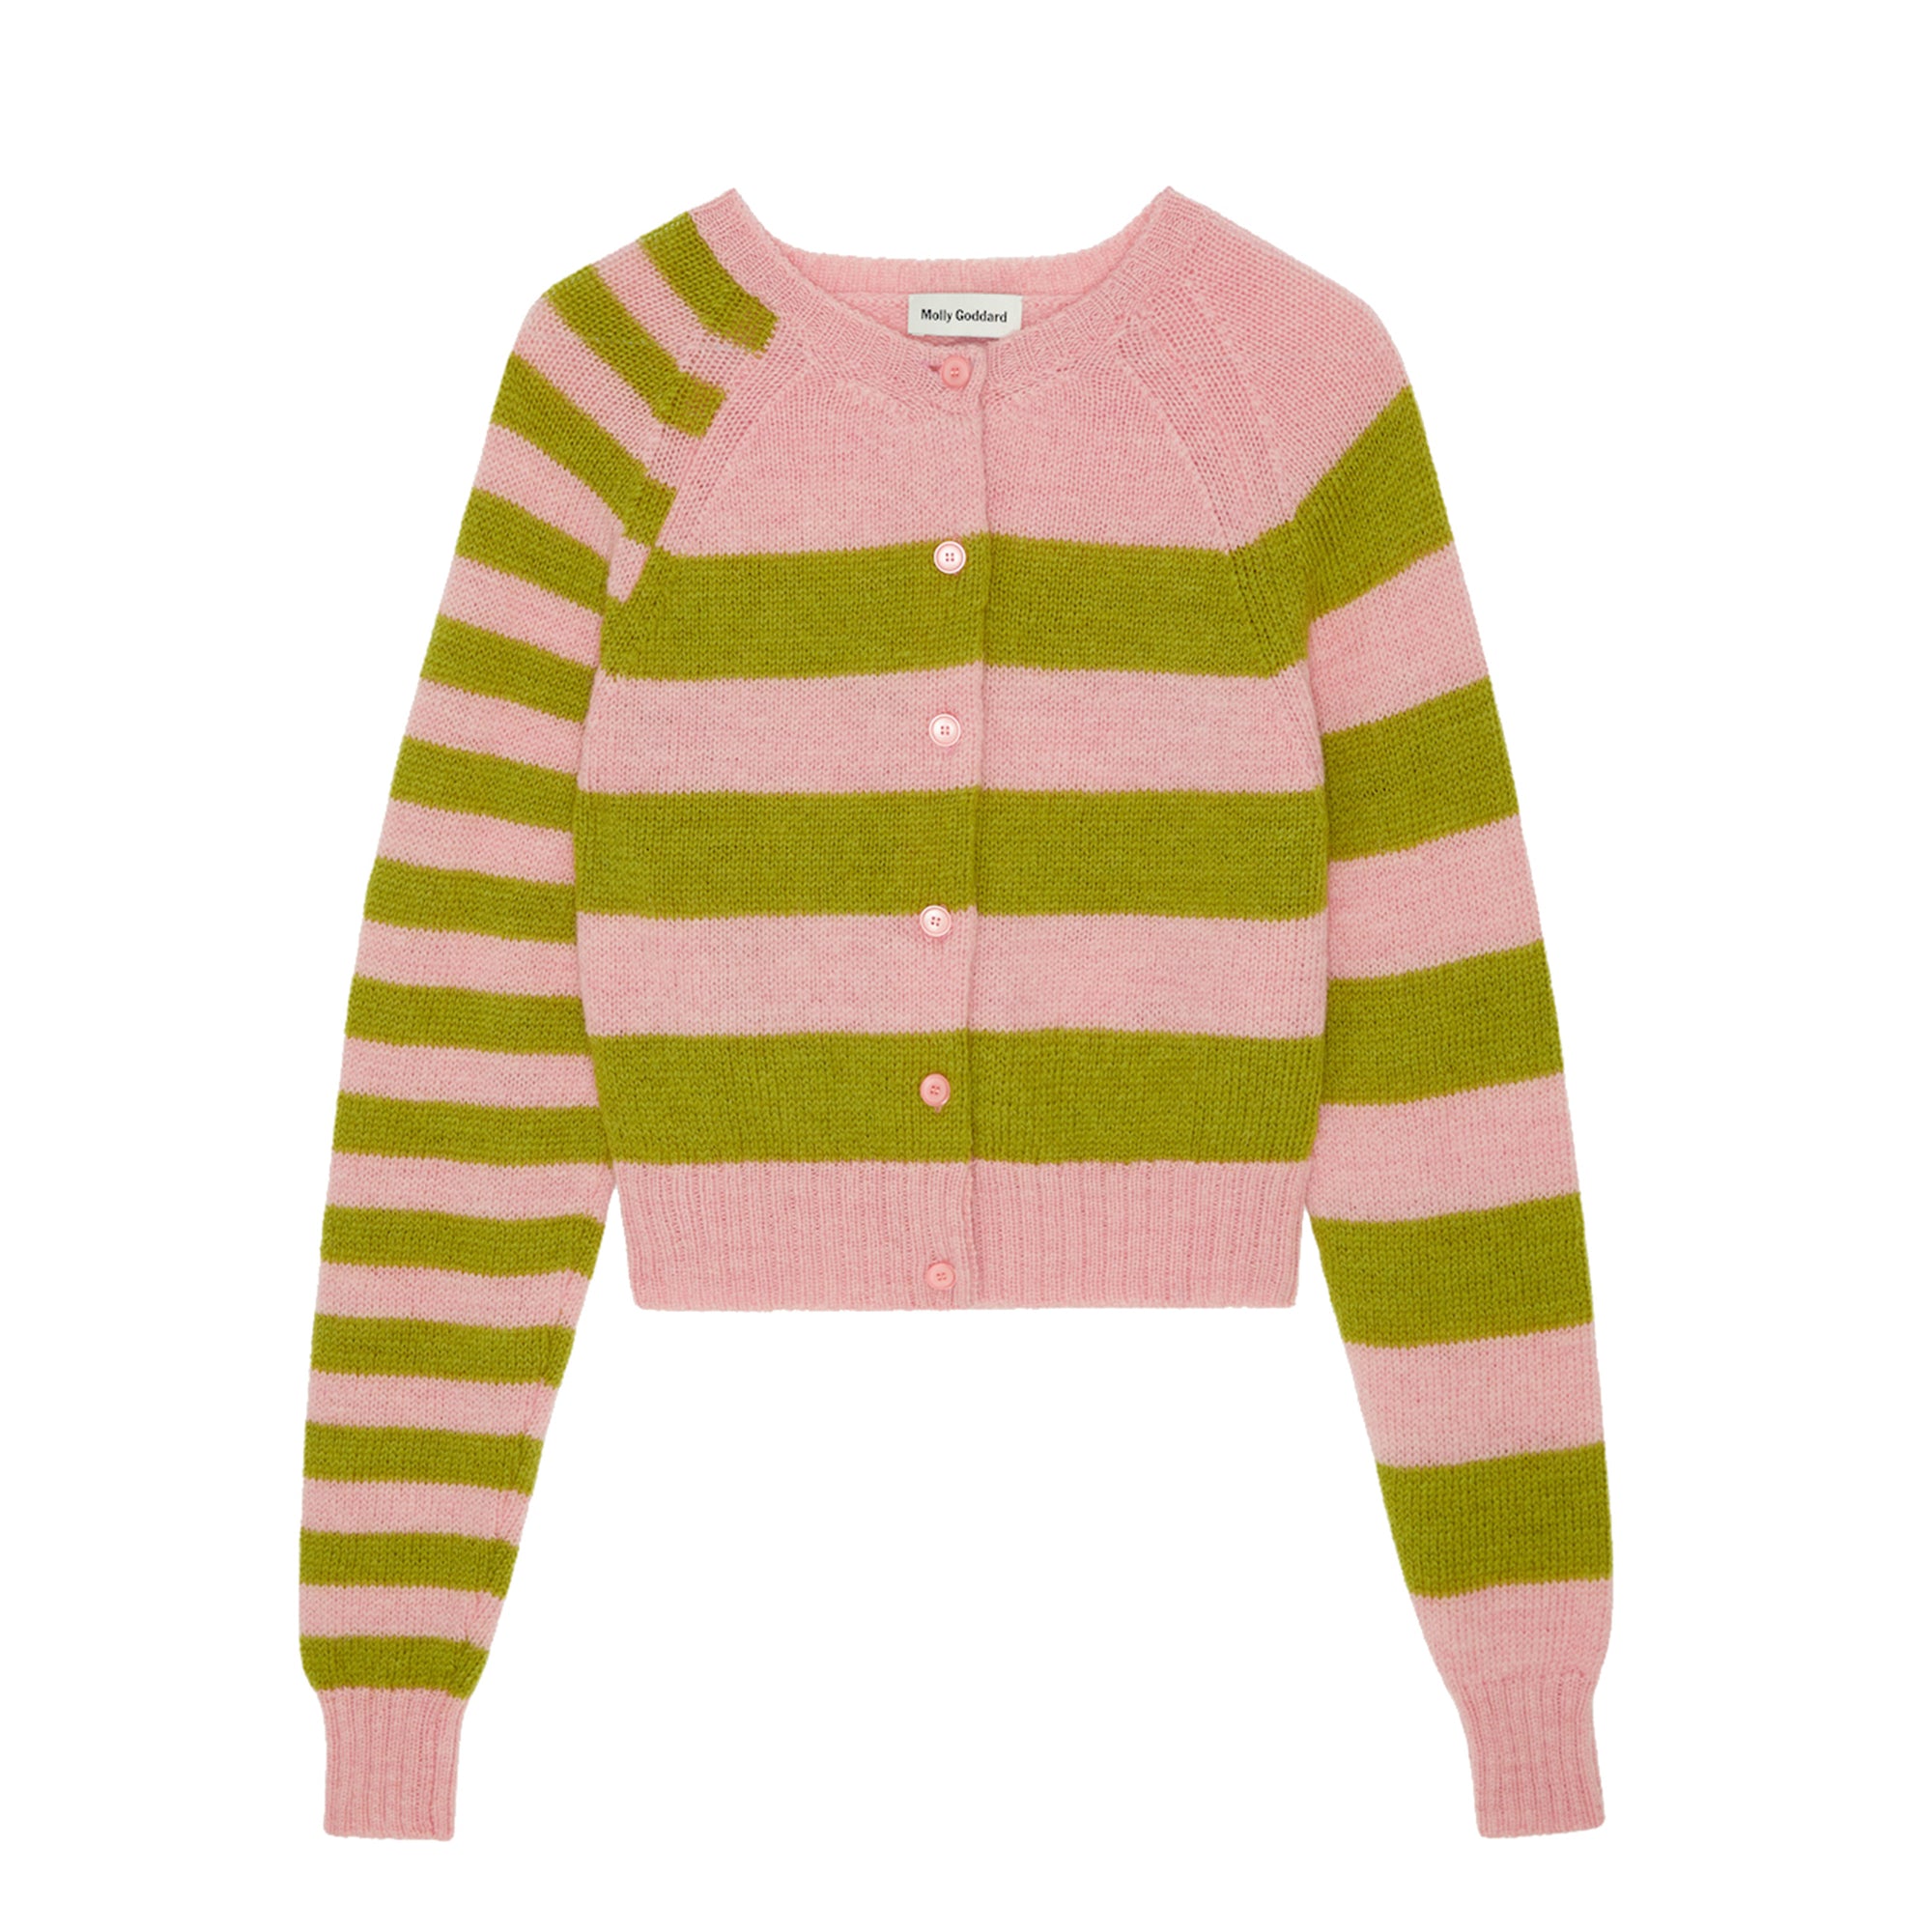 Molly Goddard - Women’s Lambswool Striped Cardigan - (Pink/Green) view 1